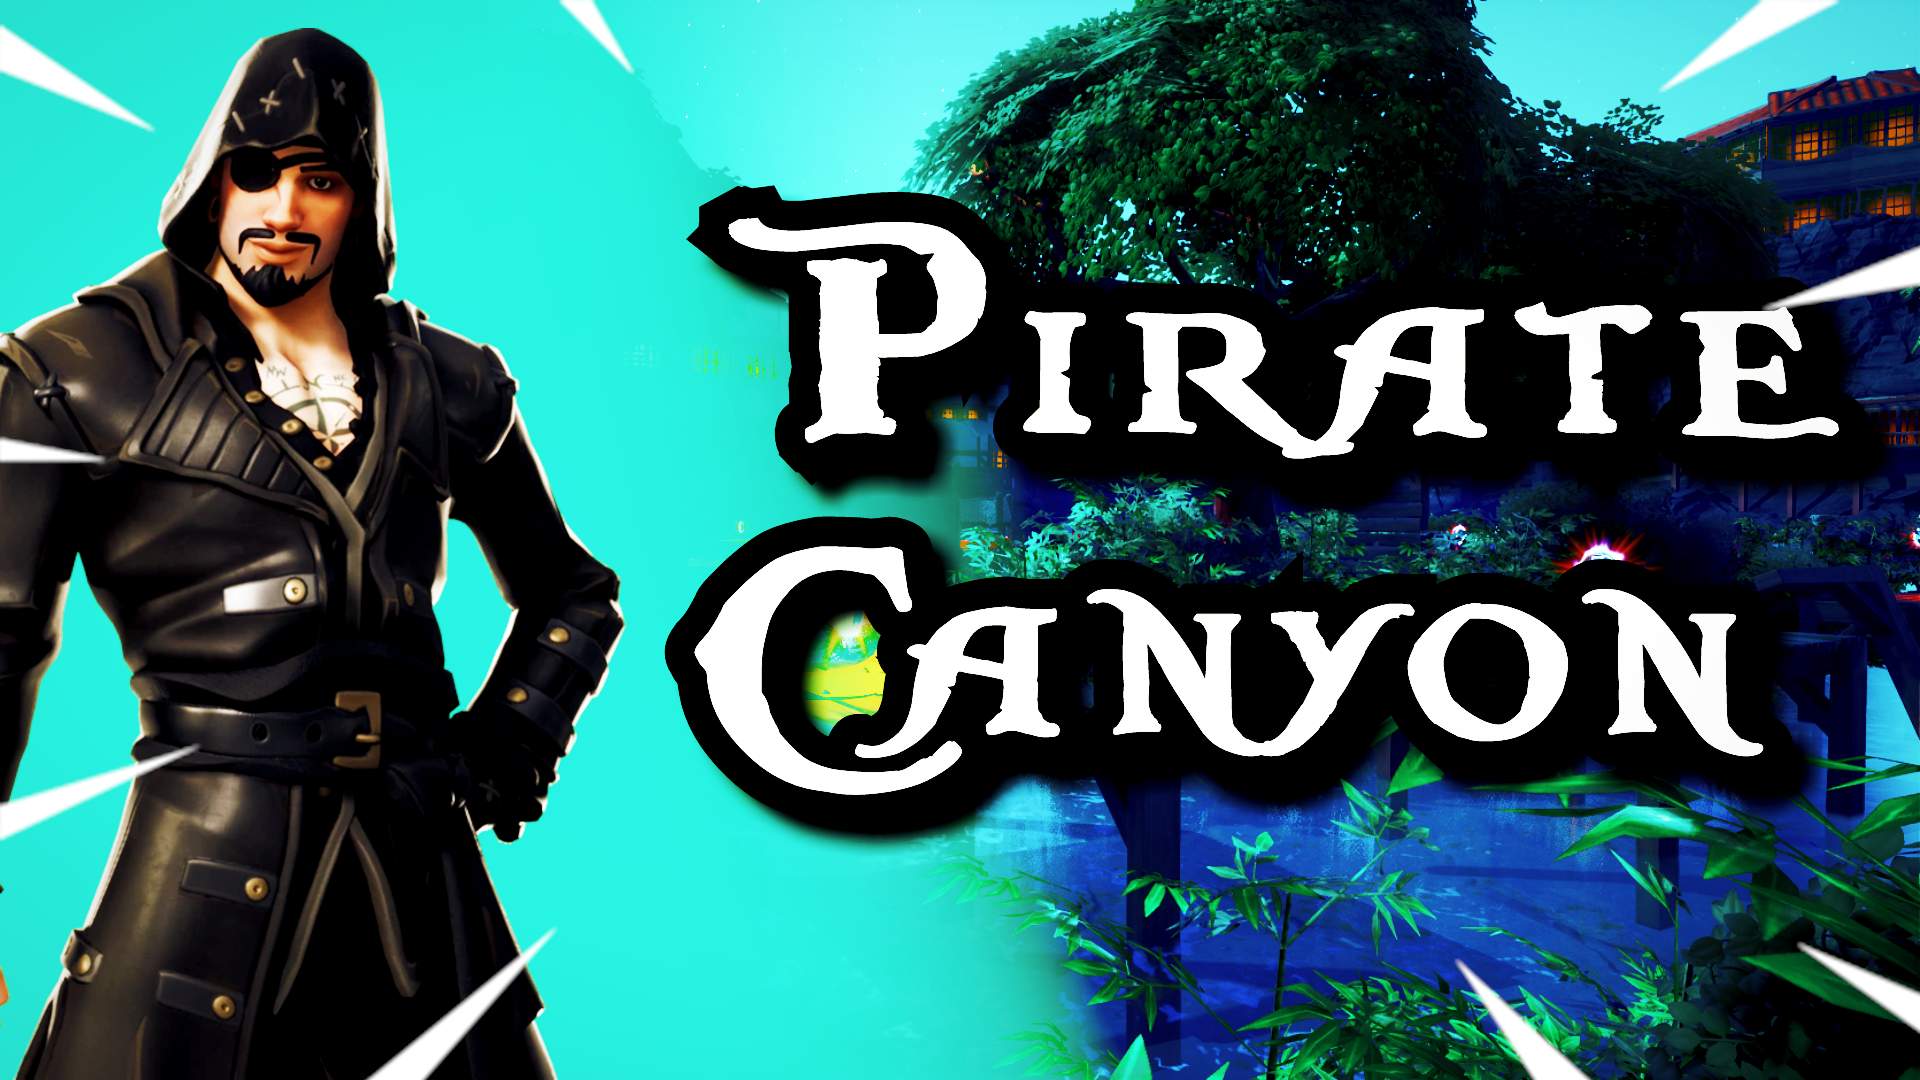 🦀 Pirate Canyon Deathrun 🦀